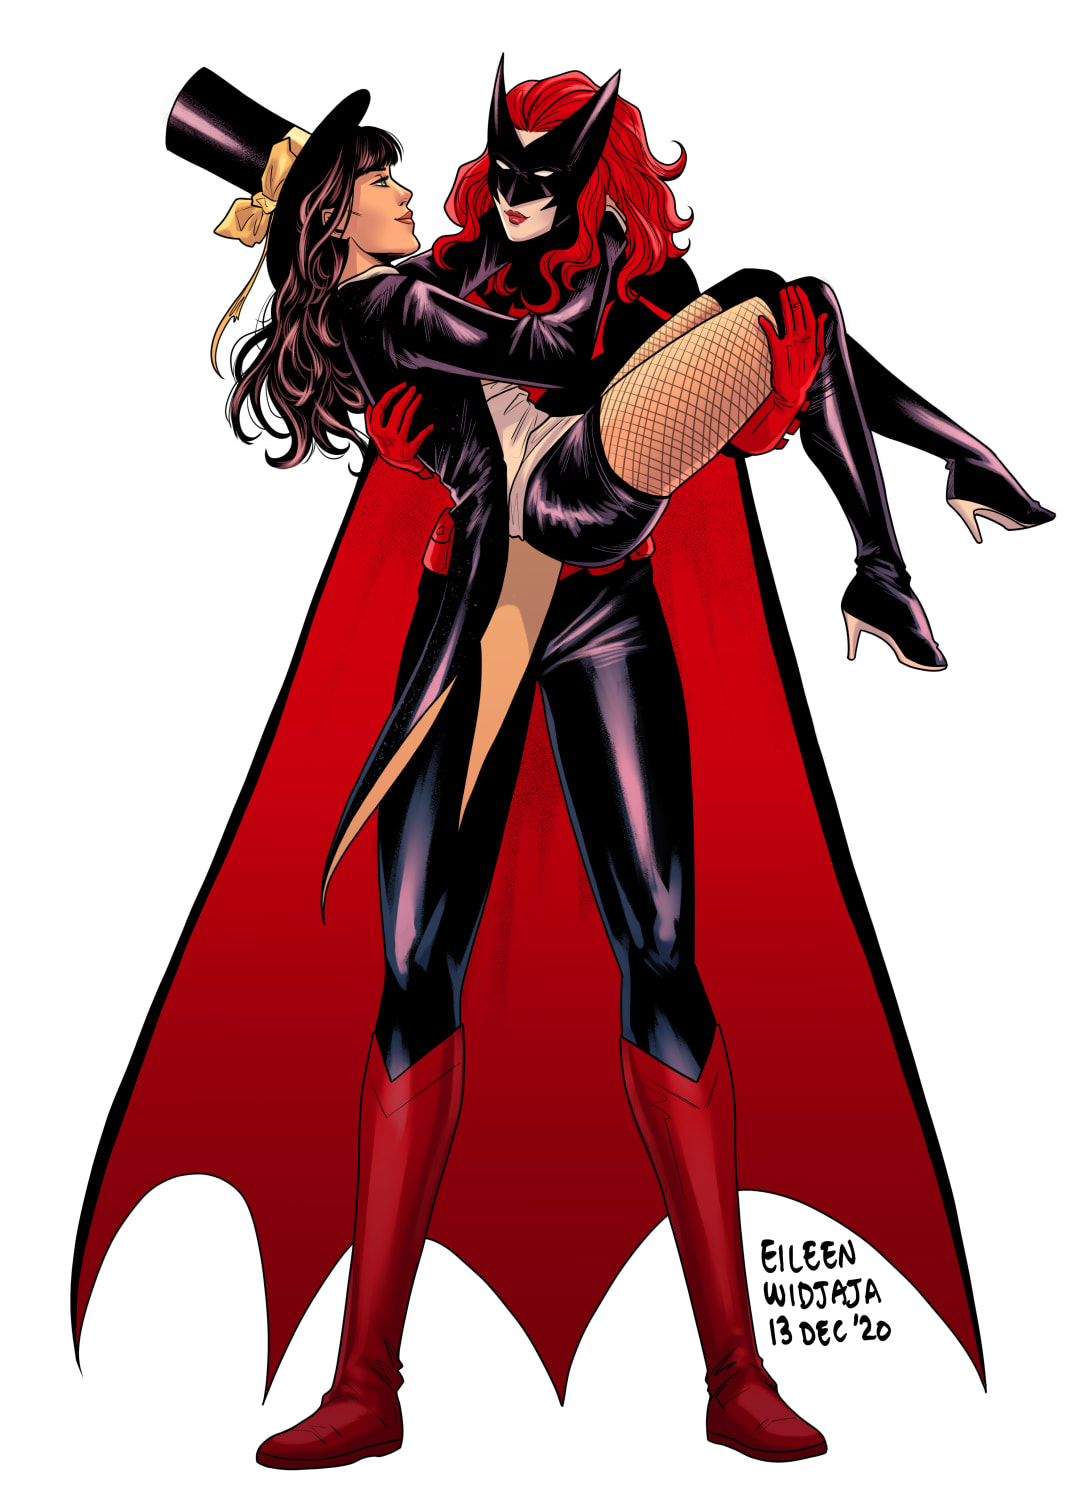 Batwoman and Zatanna by Eileen Widjaja